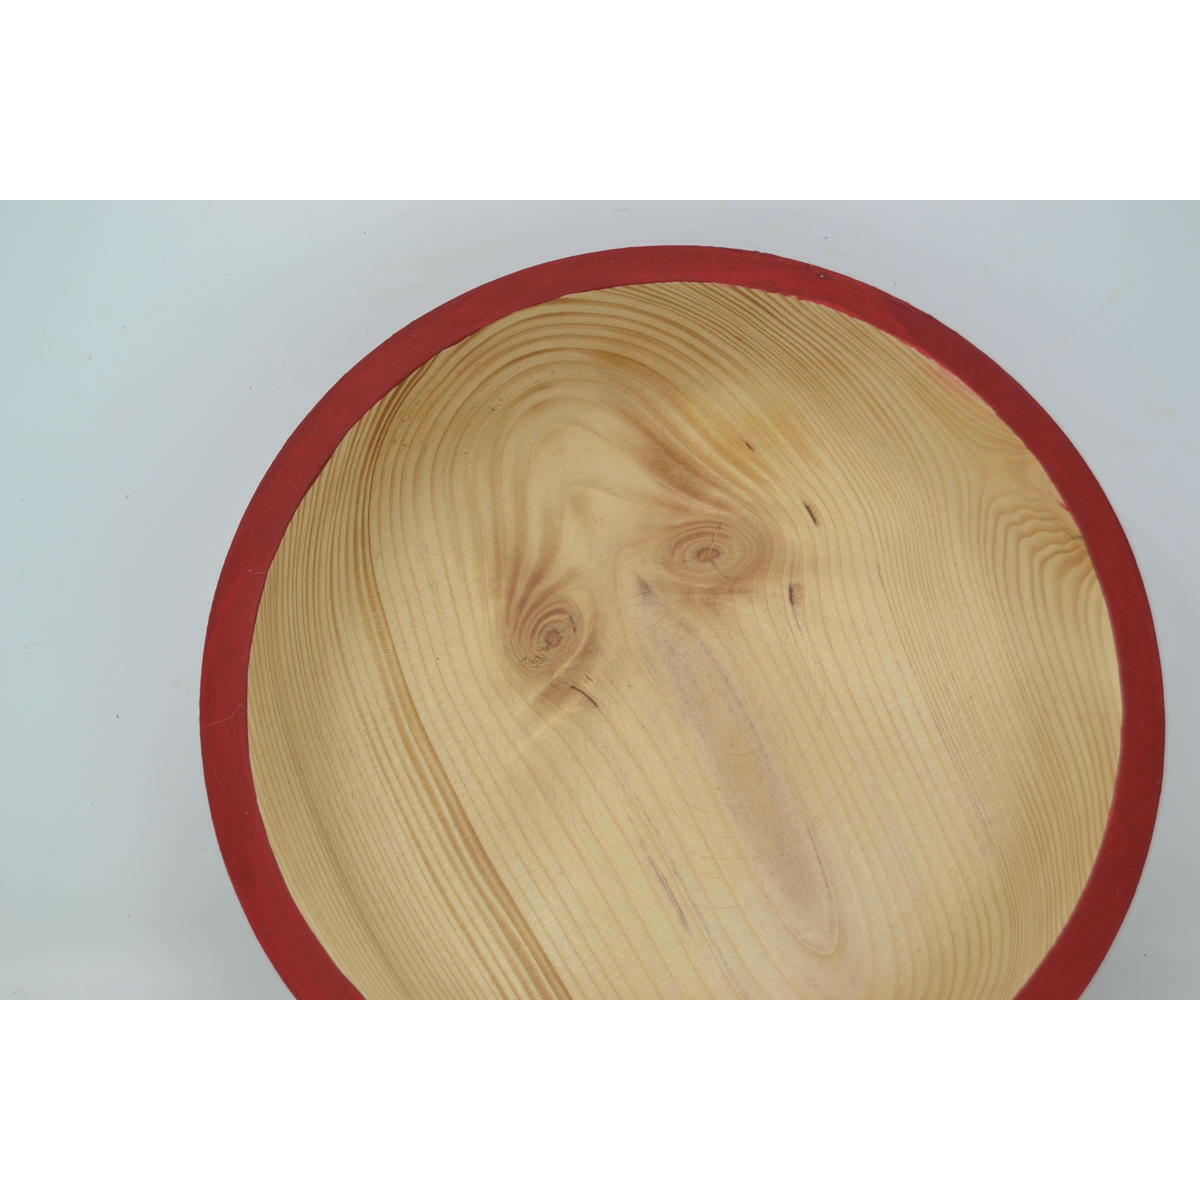 Holzschale aus Fichtenholz mit rotem Rand